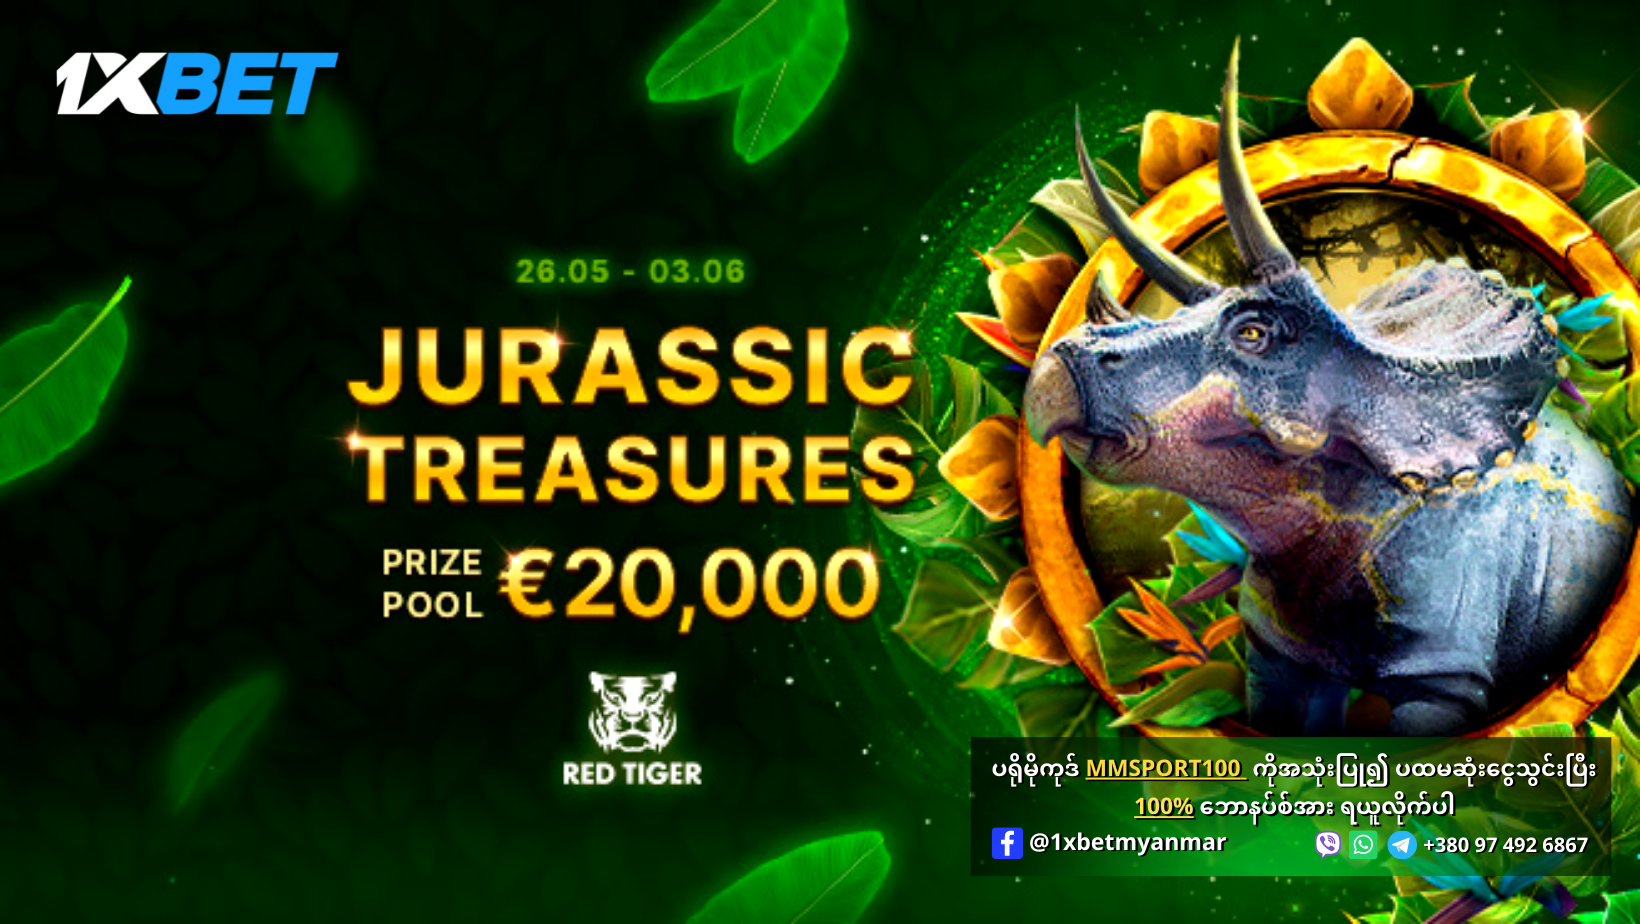 1xBet Jurassic Treasures Promotion